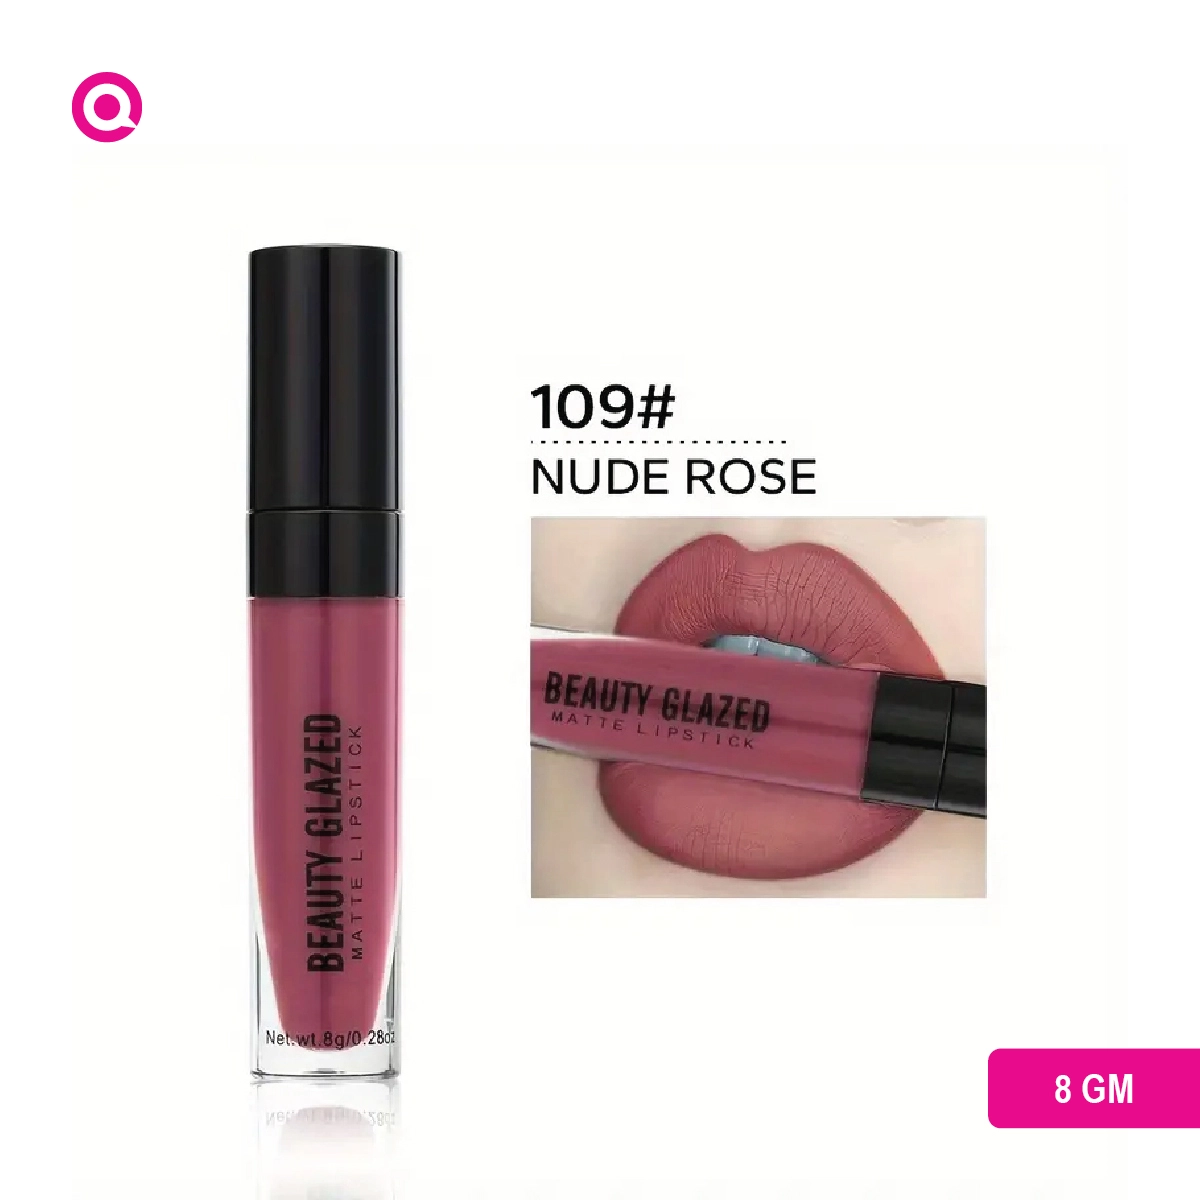 Beauty Glazed Matte Lipstick-NUDE ROSE-109